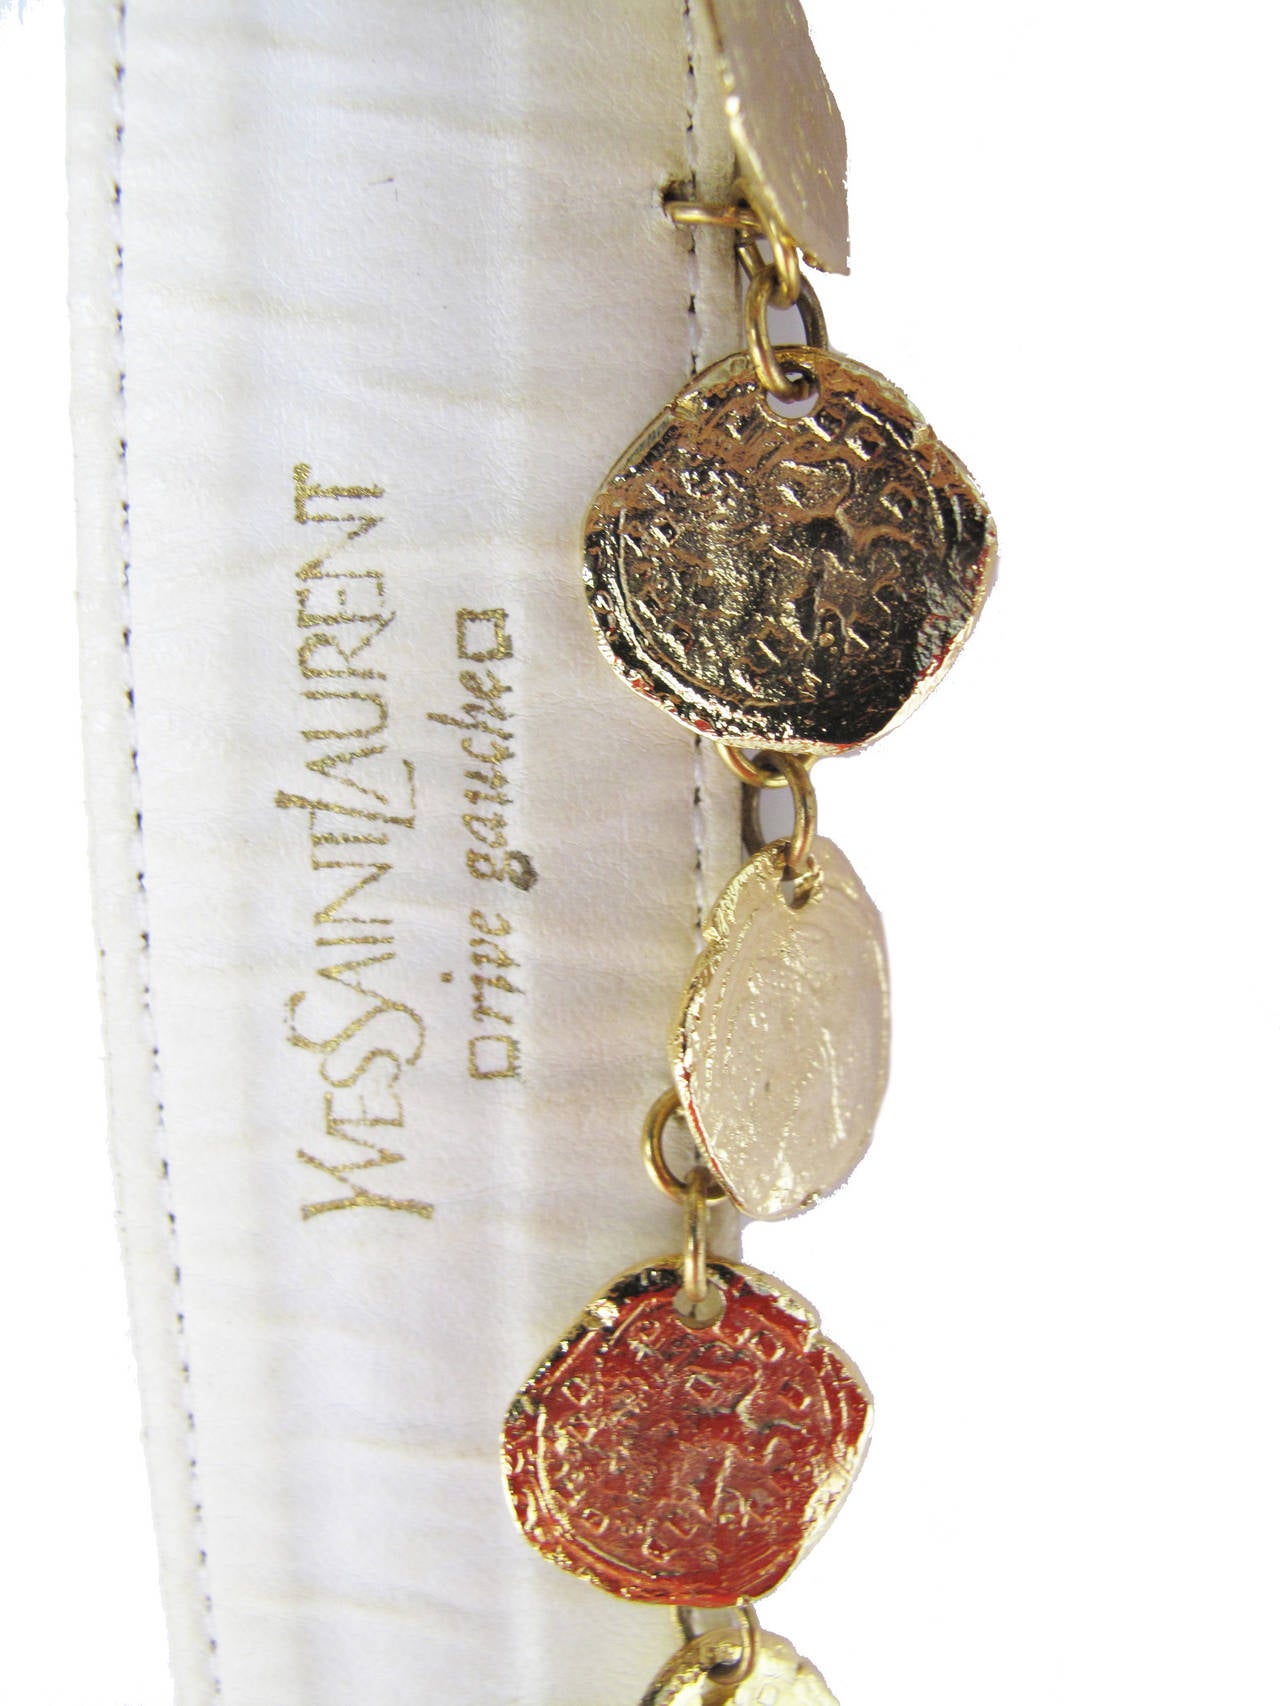 Yves Saint Laurent coin belt with tassels 1